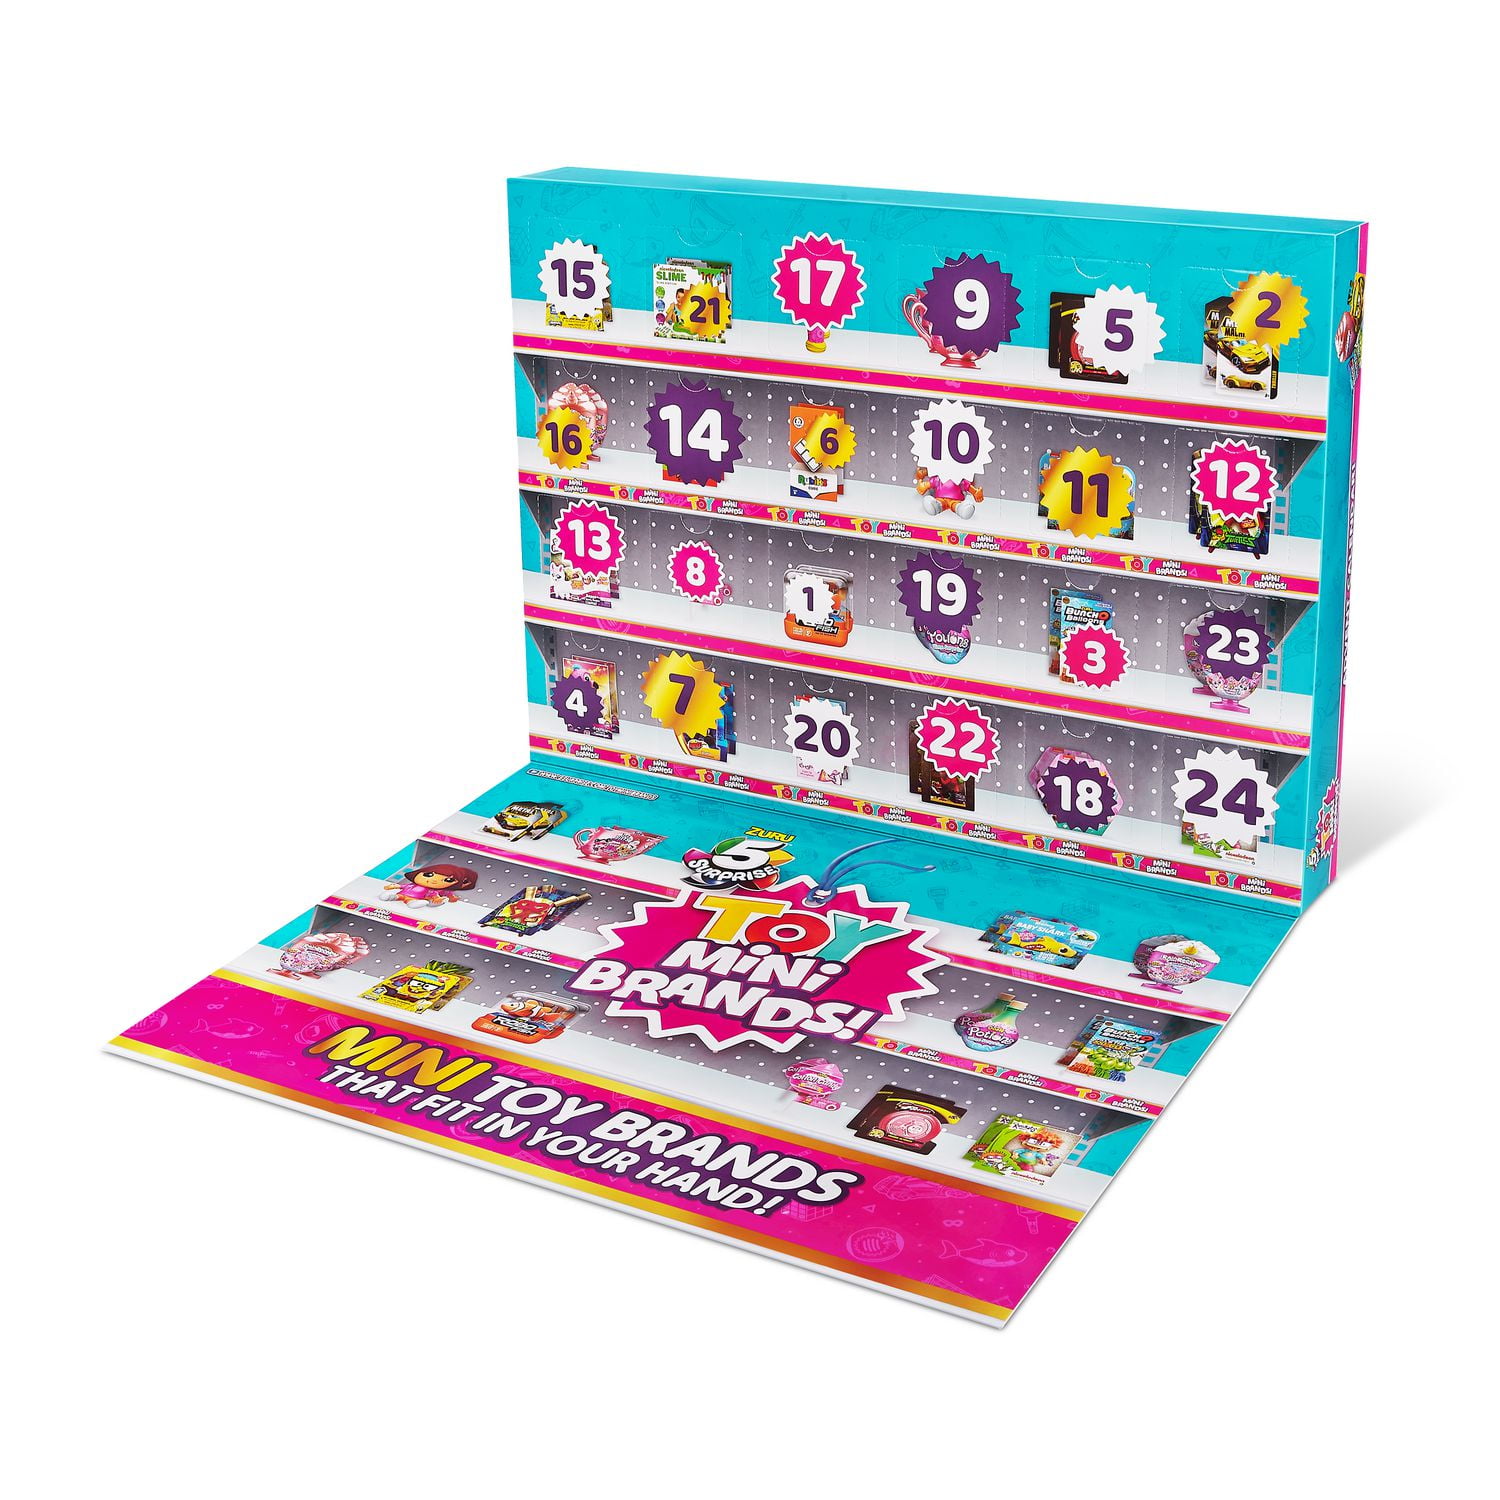 5 Surprise Toy Mini Brands Limited Edition Advent Calendar by Zuru